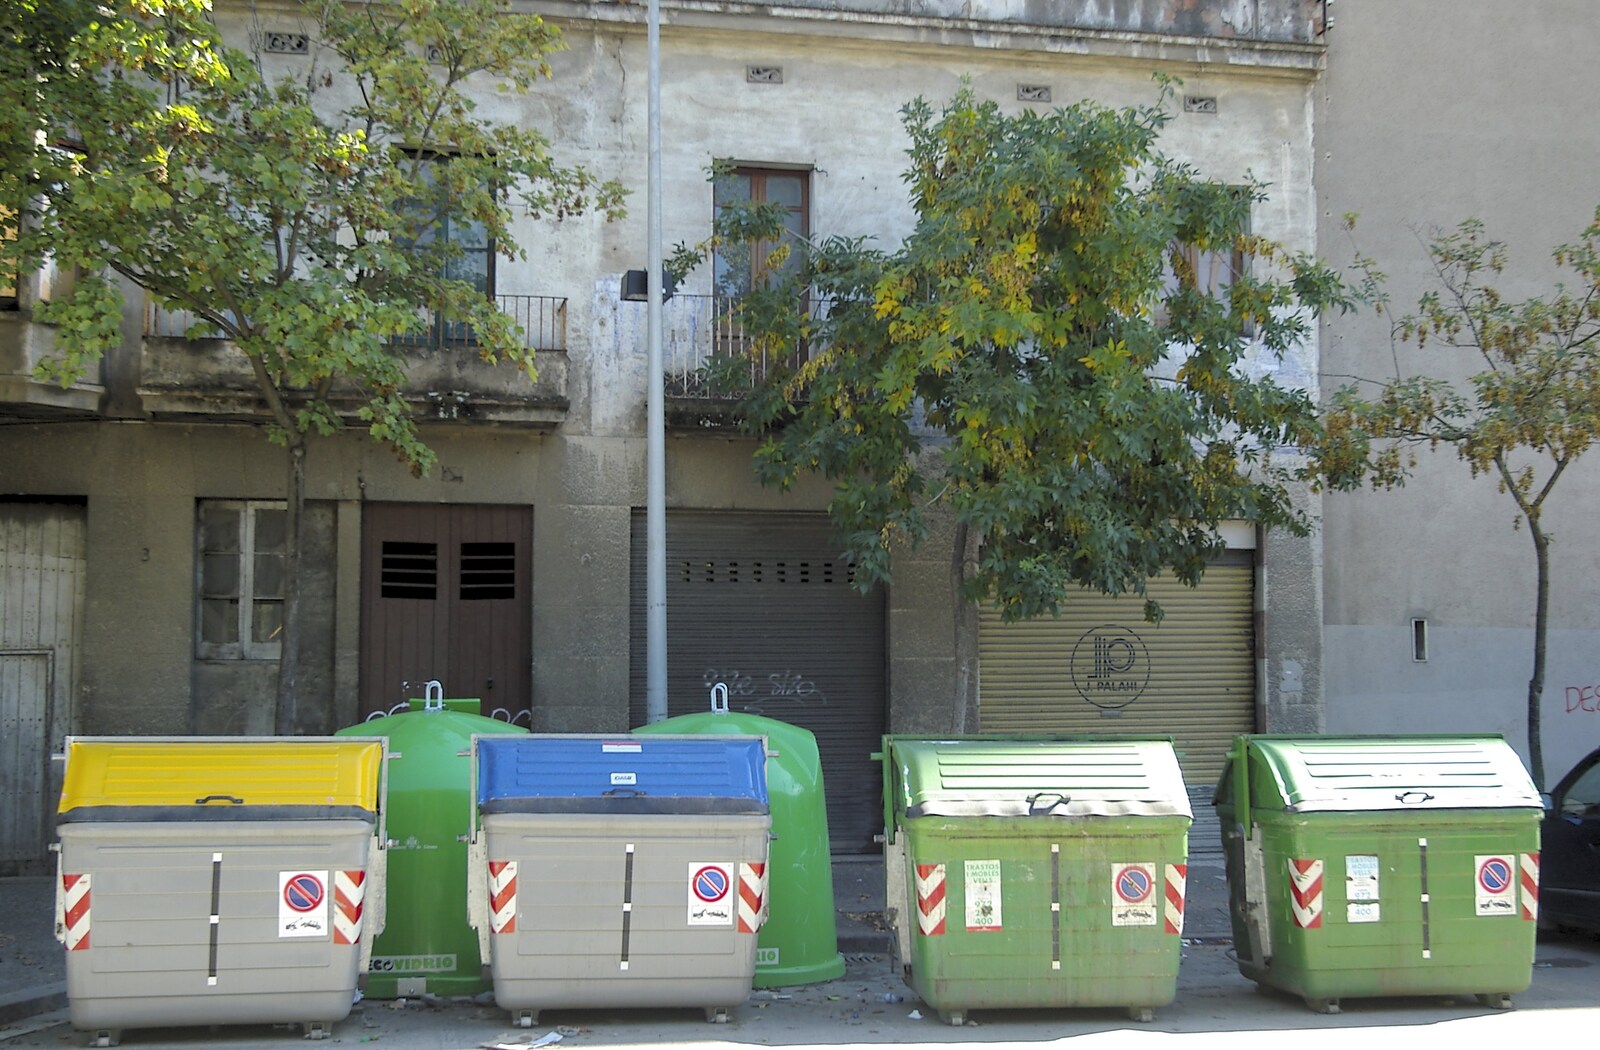 Multi-coloured bins in the street from Girona, Catalunya, Spain - 17th September 2006